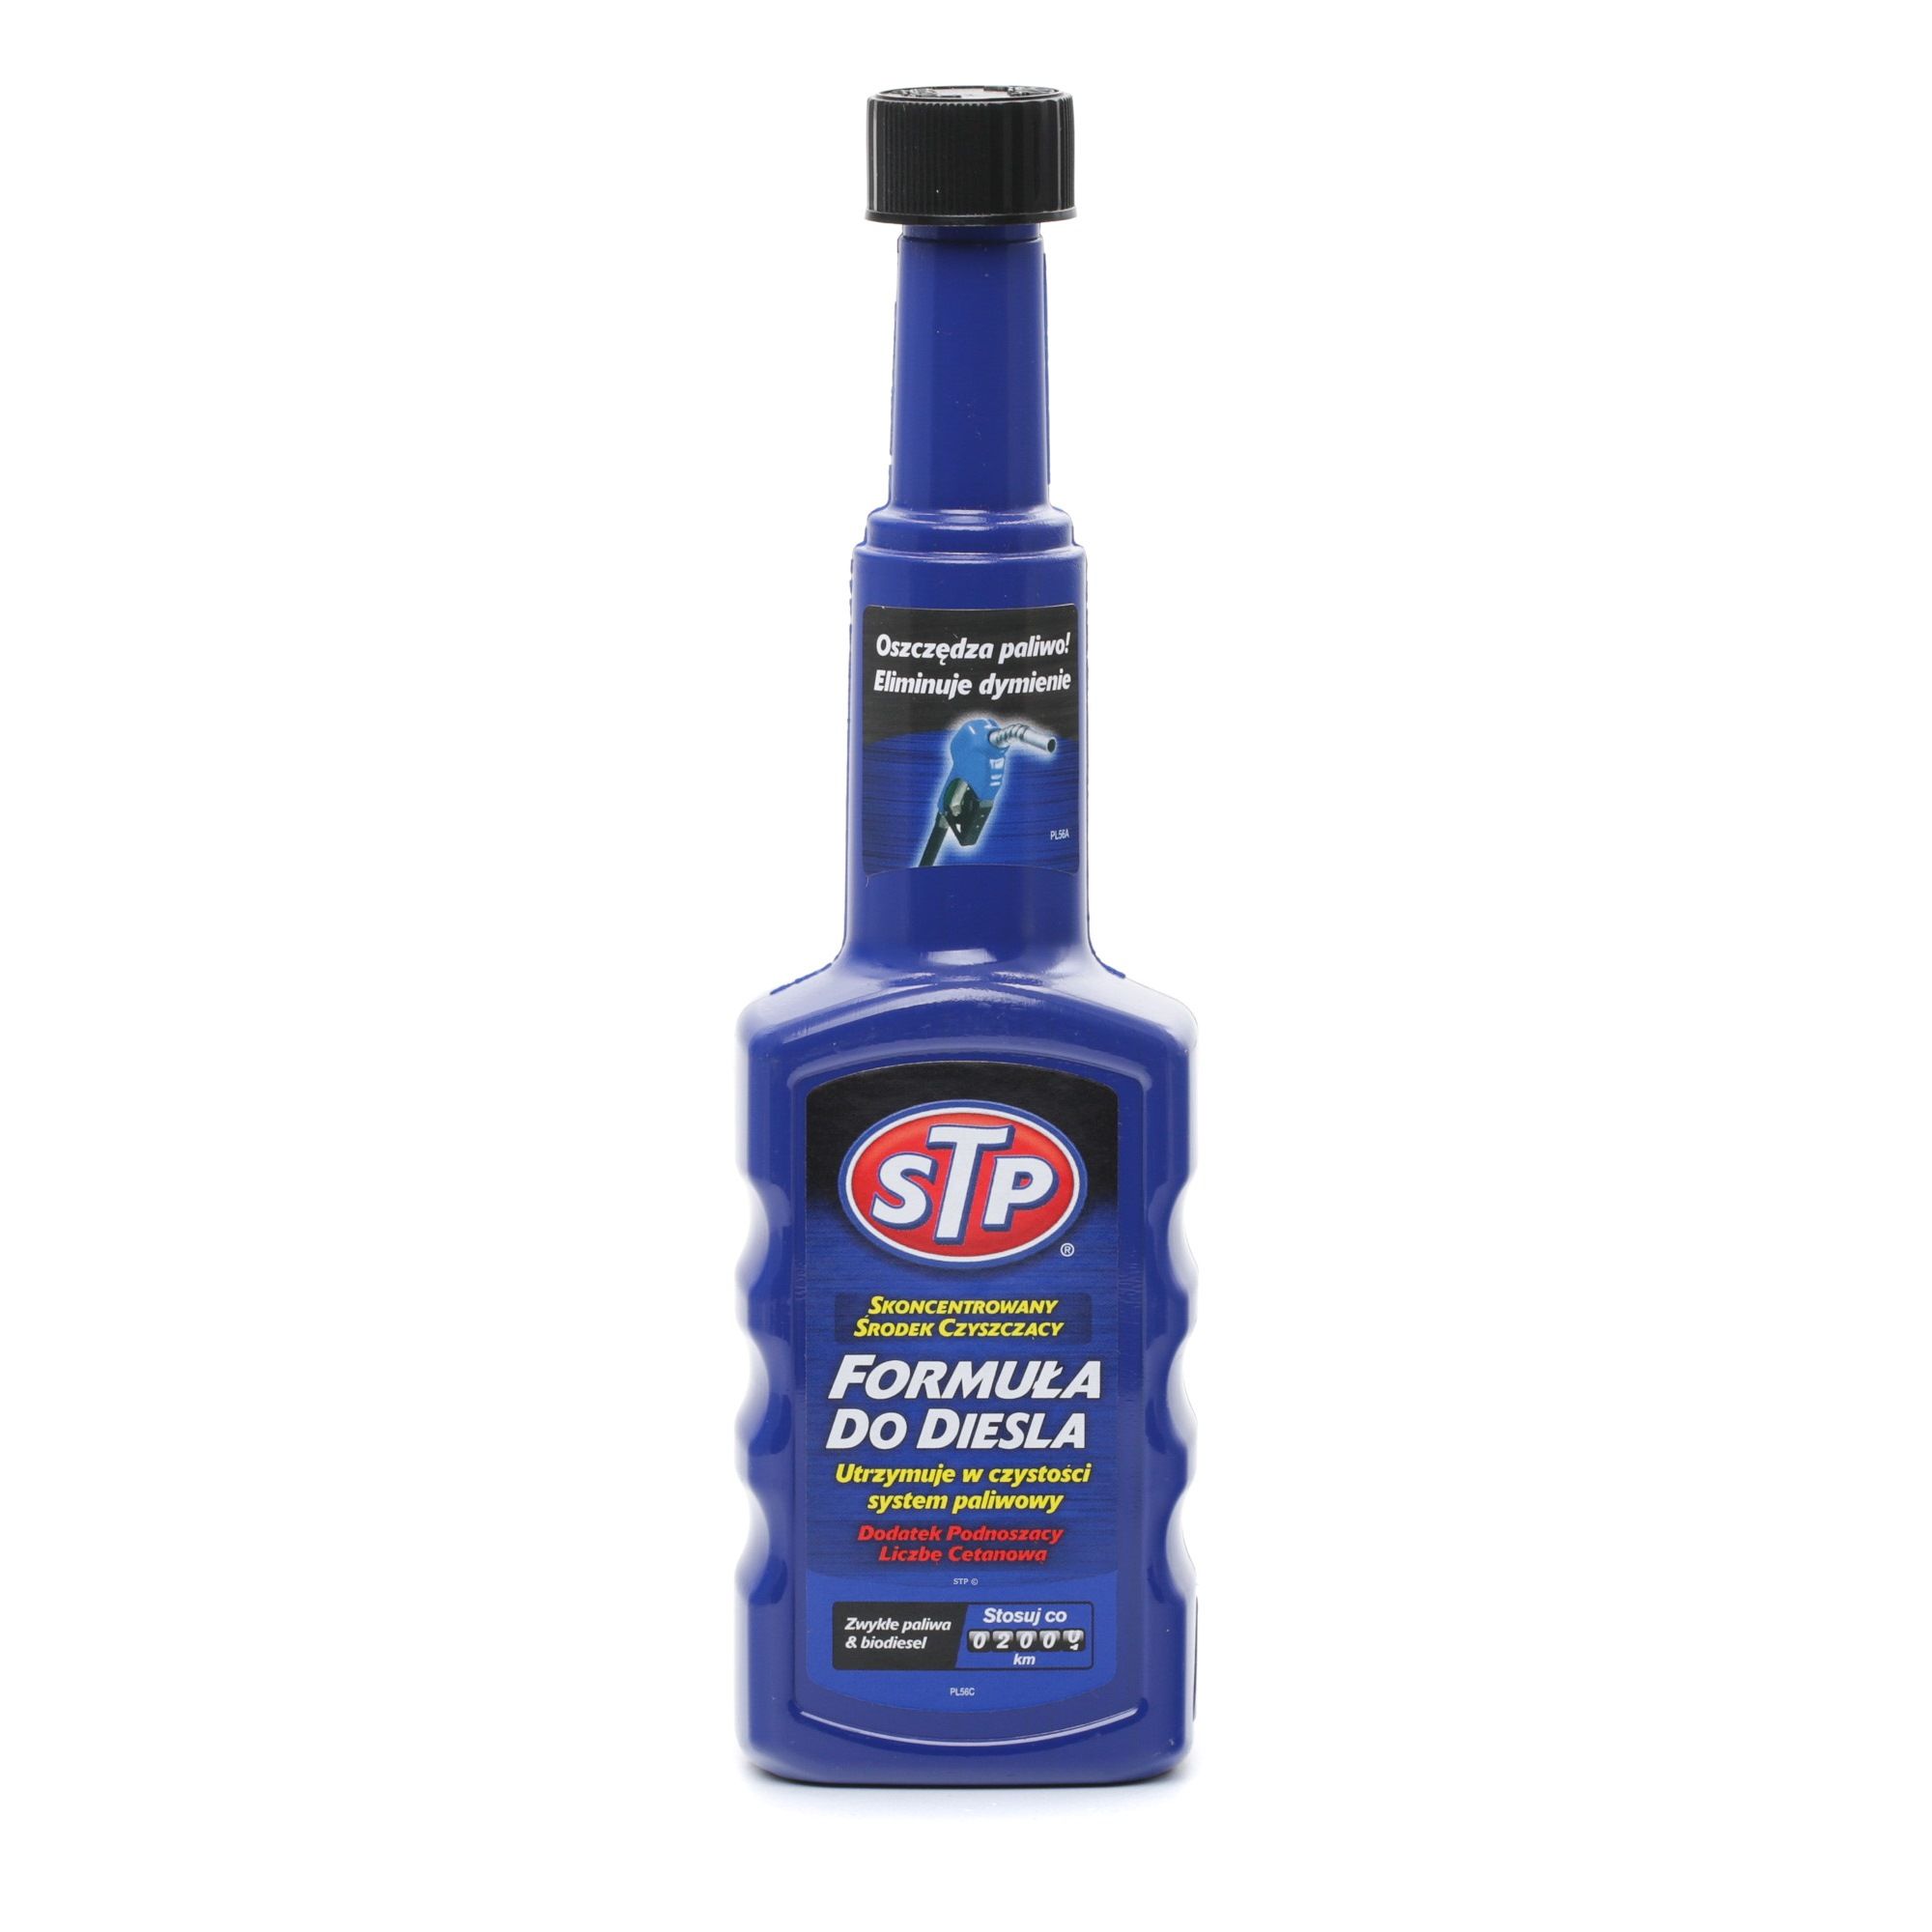 STP 30037 Fuel additives for diesel Bottle, Capacity: 200ml, Diesel